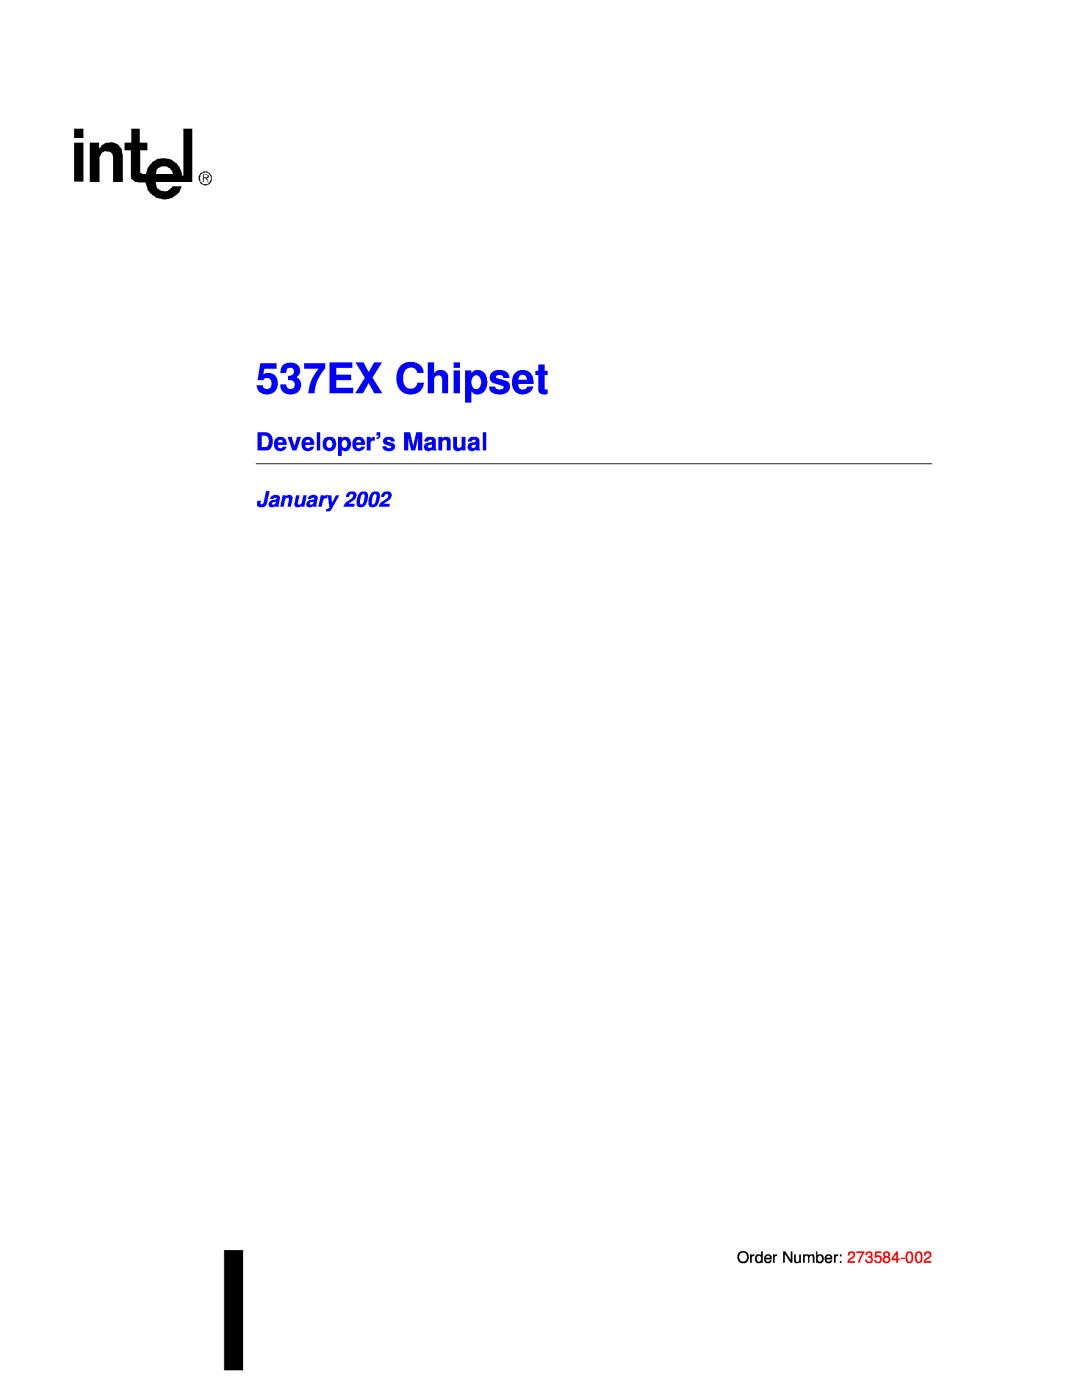 Intel manual 537EX Chipset, Developer’s Manual, January 